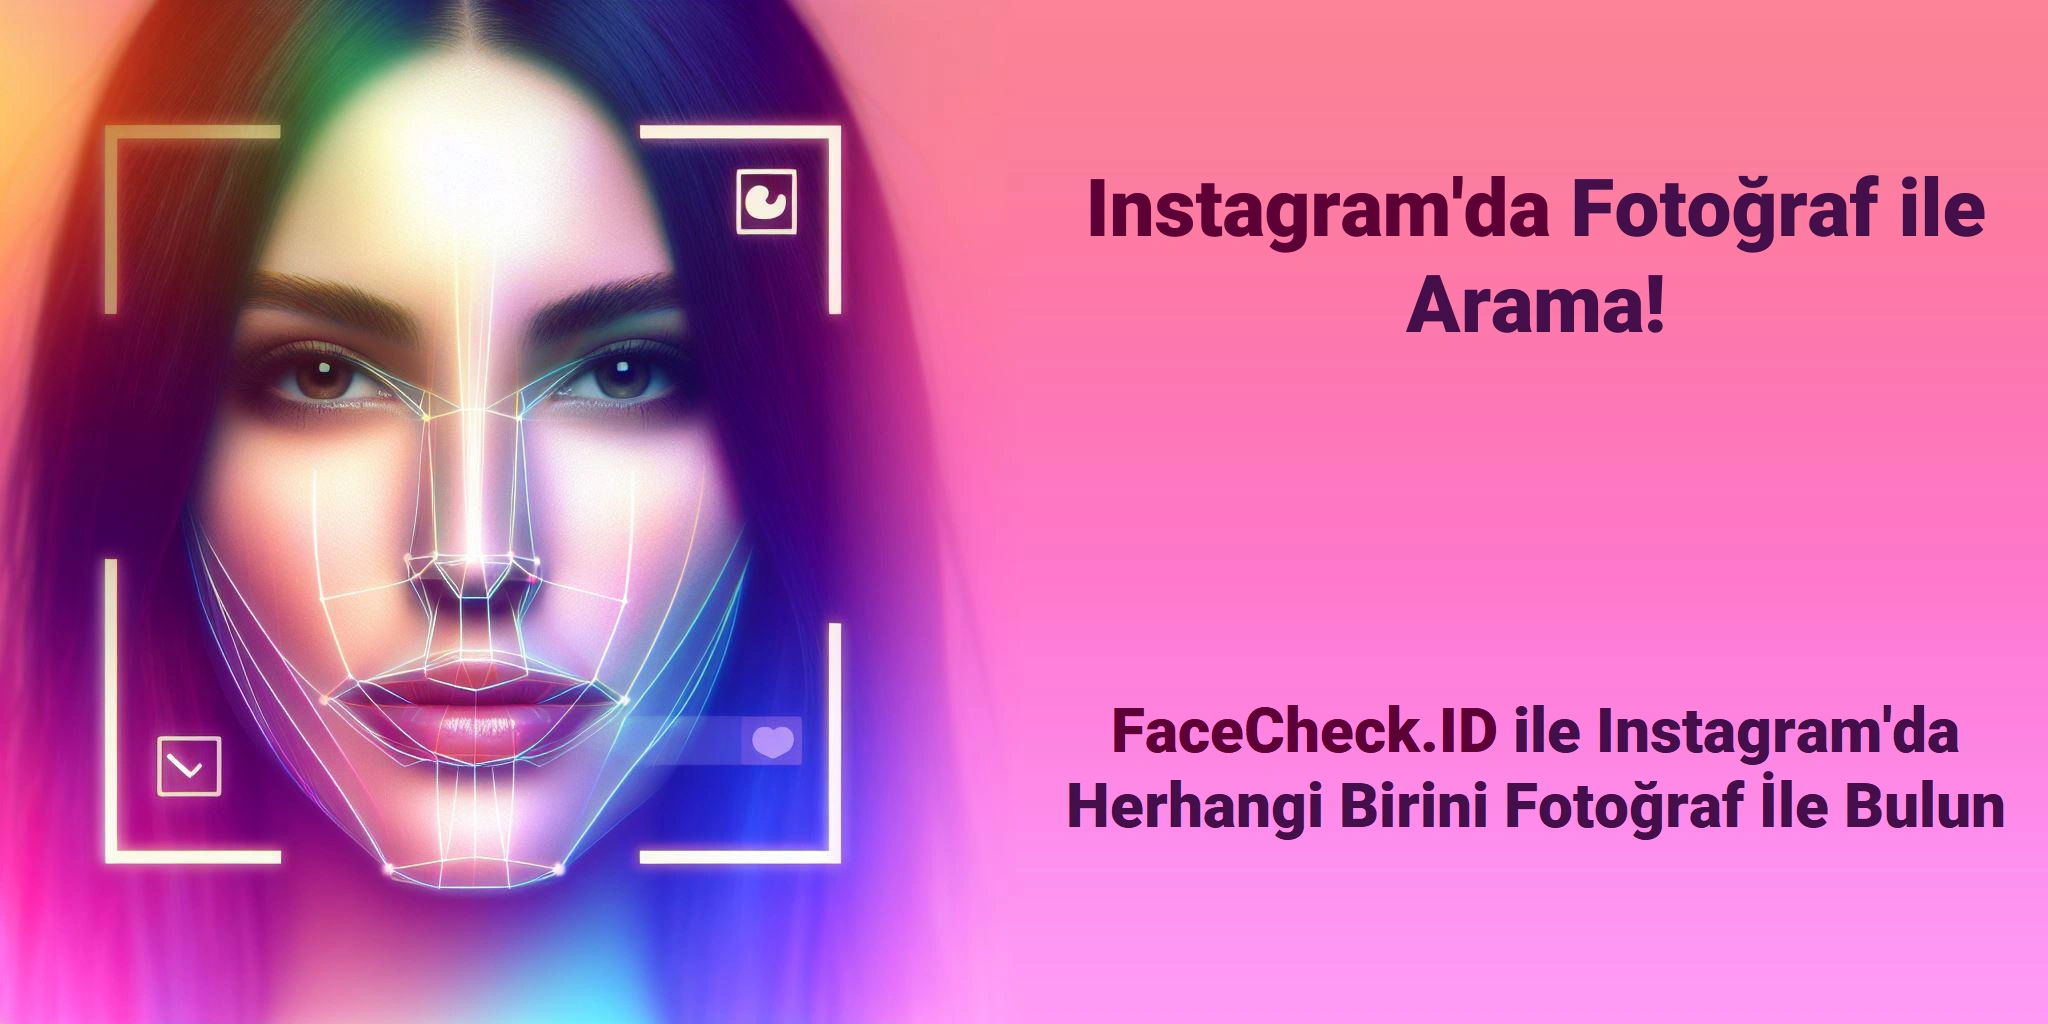 Instagram'da Fotoğraf ile Arama! FaceCheck.ID ile Instagram'da Herhangi Birini Fotoğraf İle Bulun